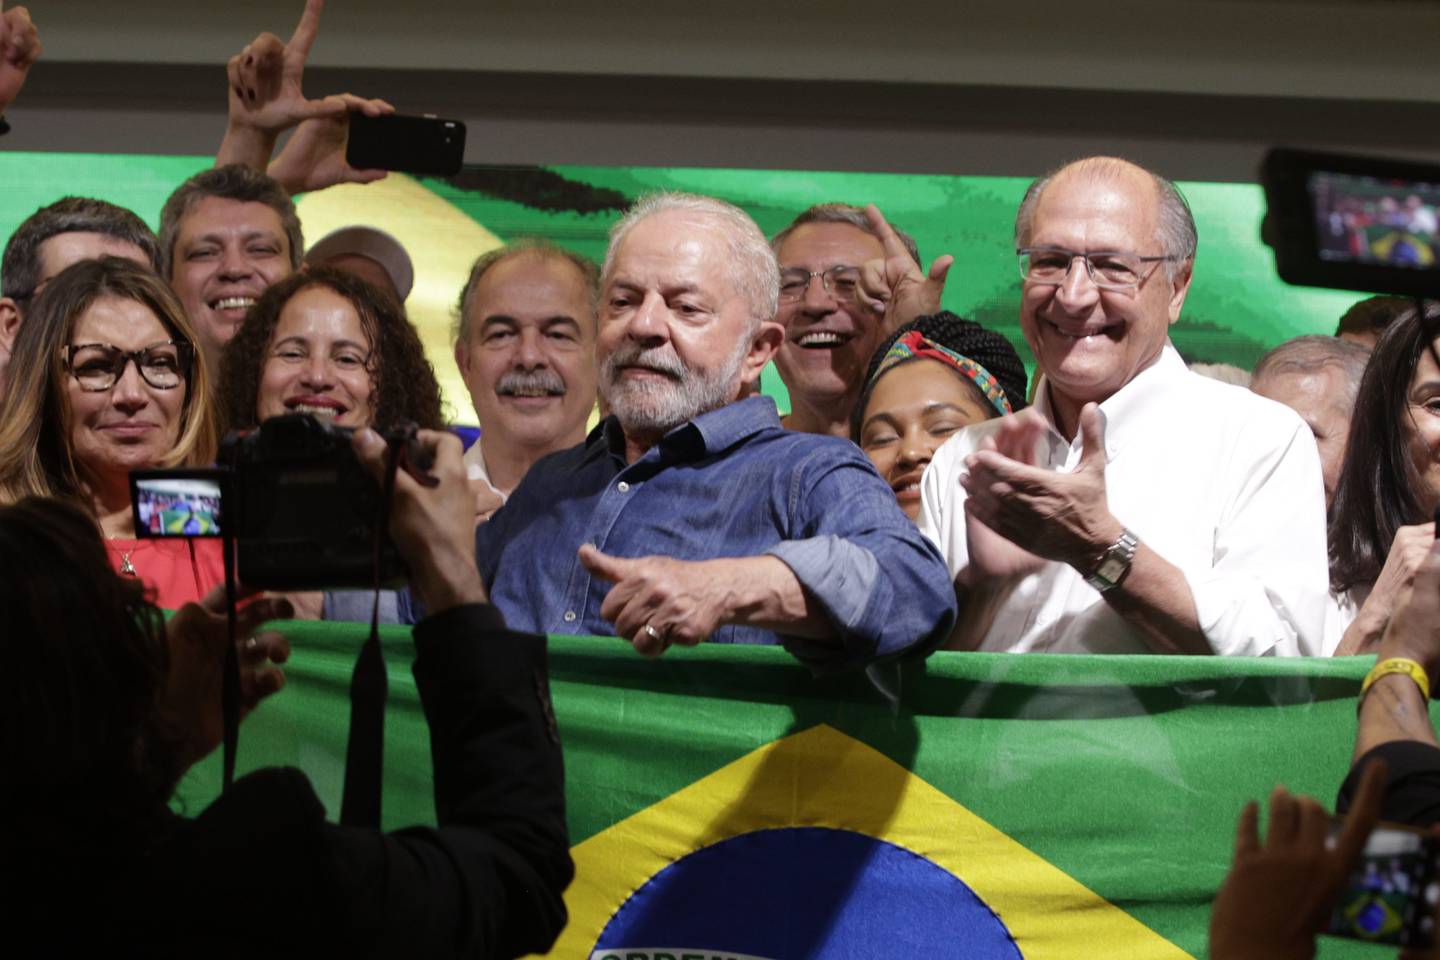 Luiz Inacio Lula da Silva, Brazil's president-elect, center, poses for a photograph after winning the runoff presidential election in Sao Paulo.